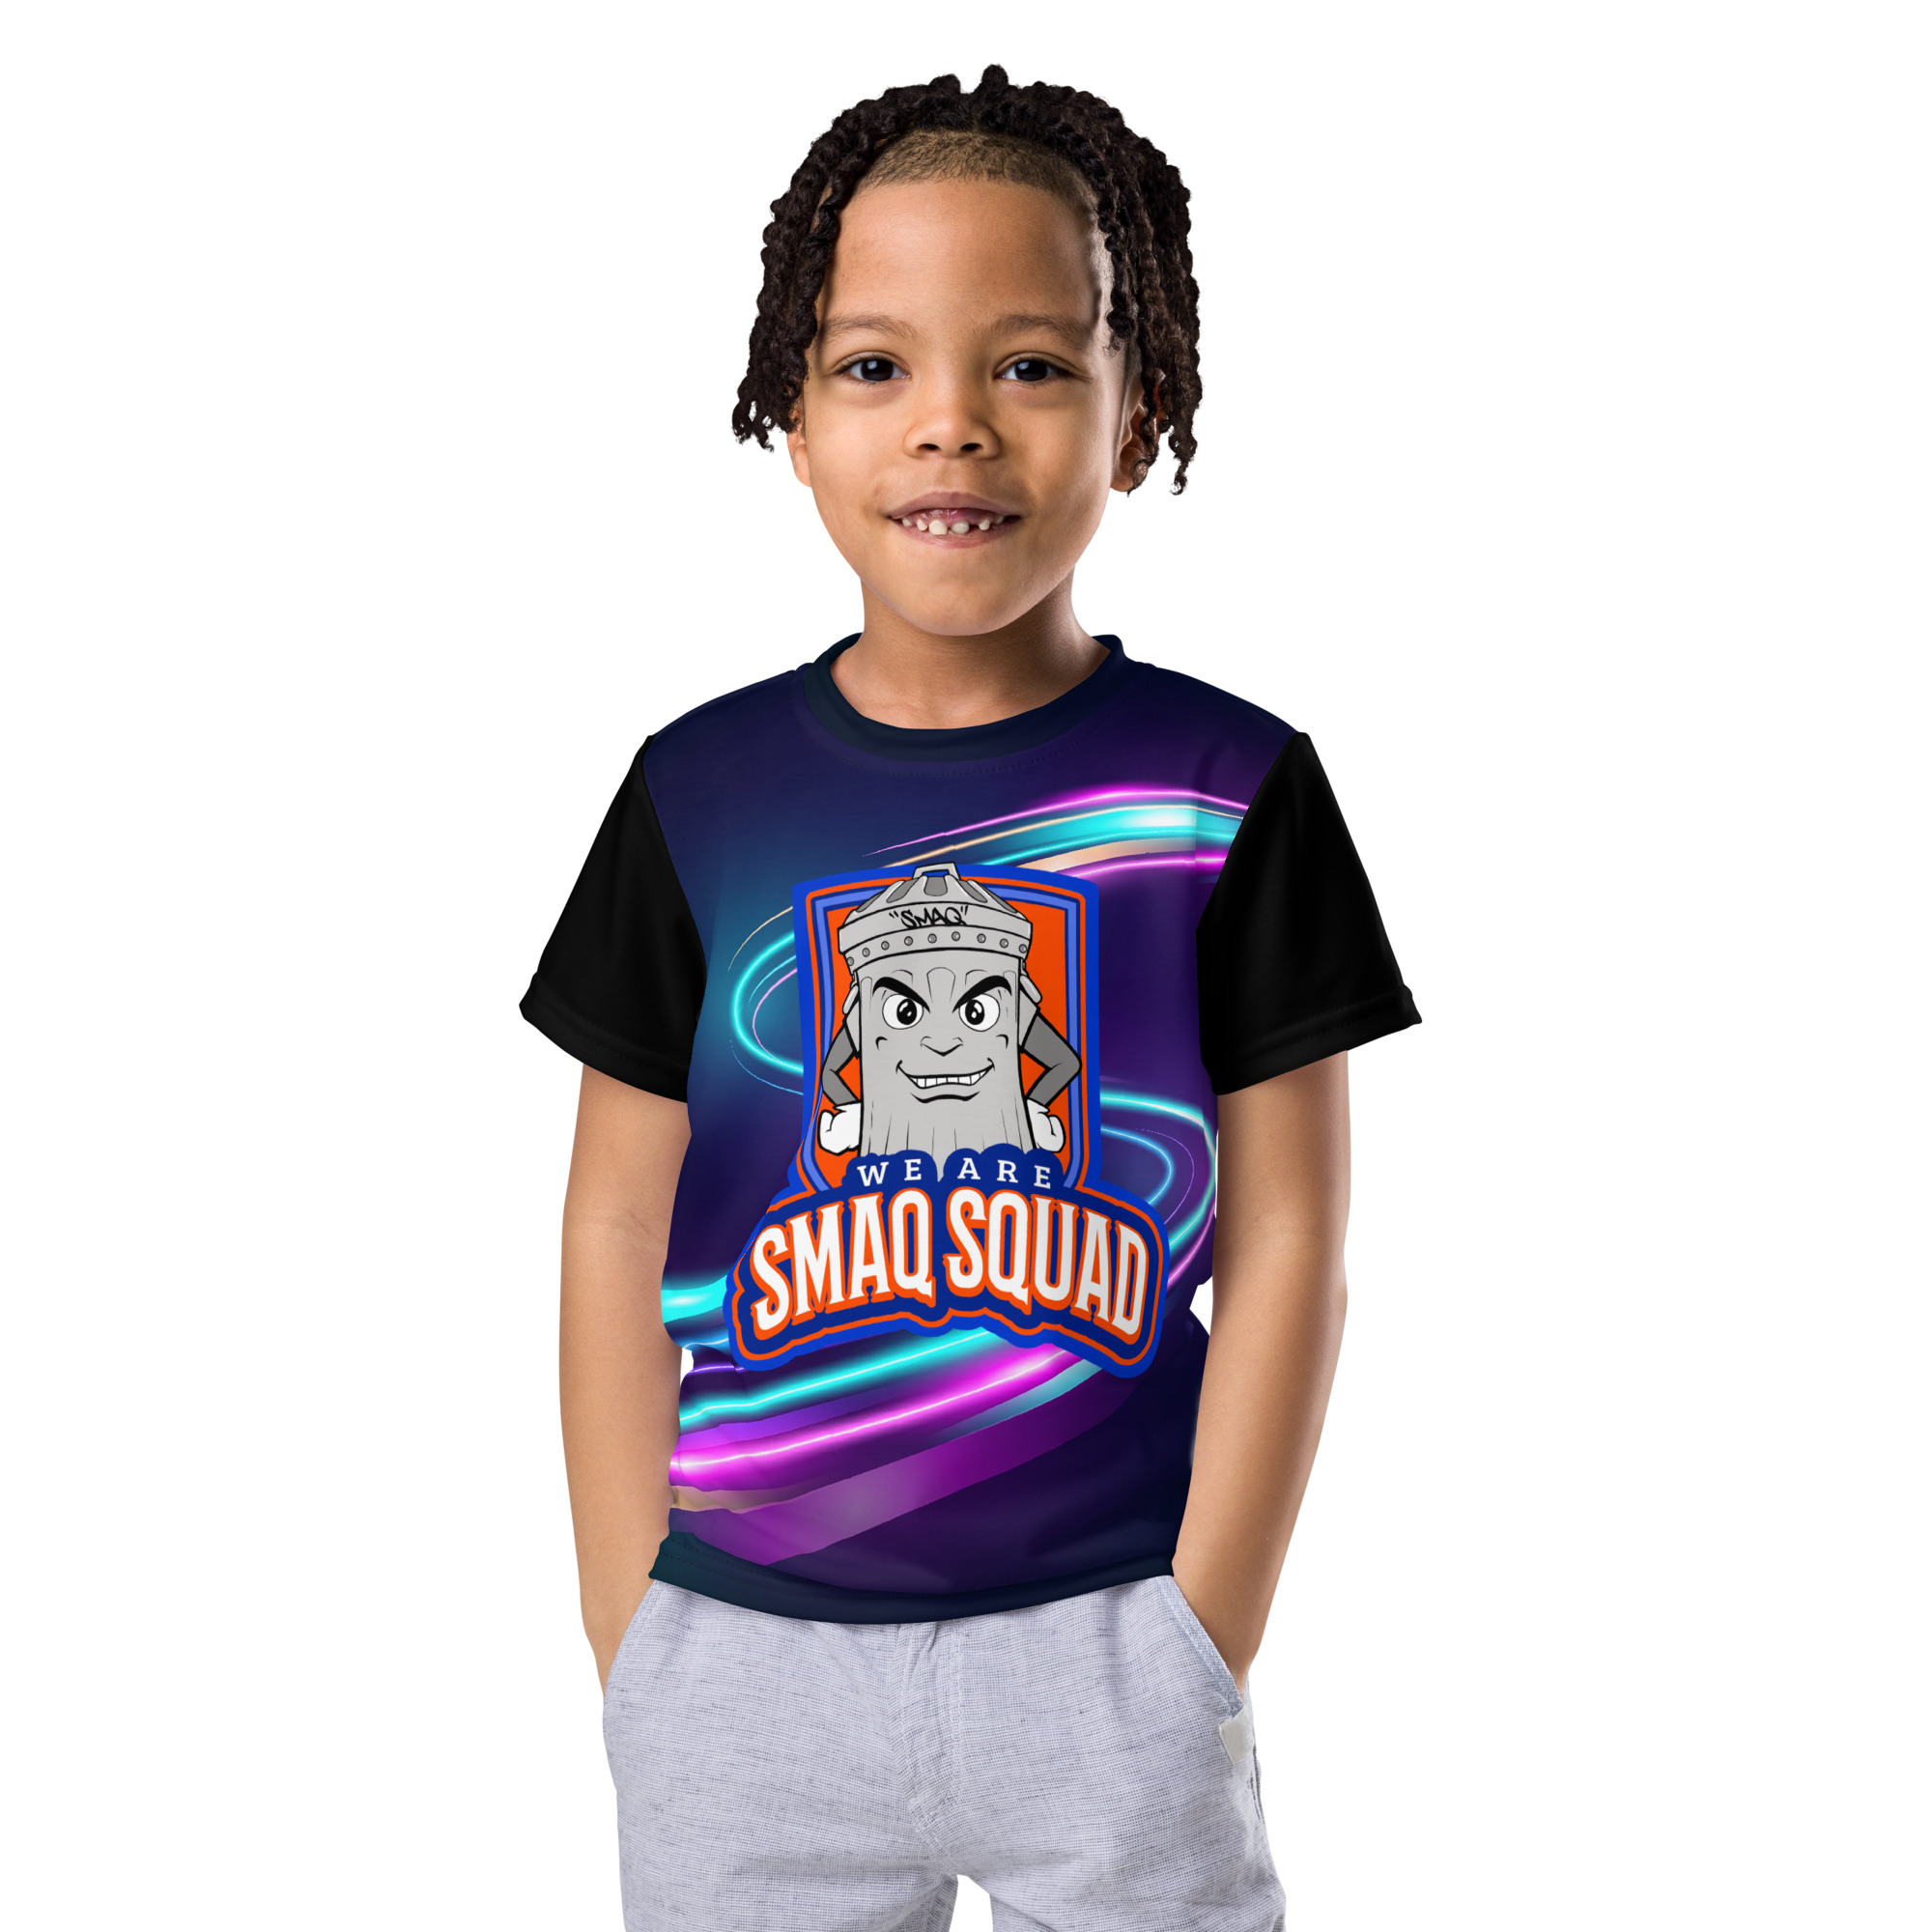 SMAQ SQUAD Neon Kids crew neck t-shirt